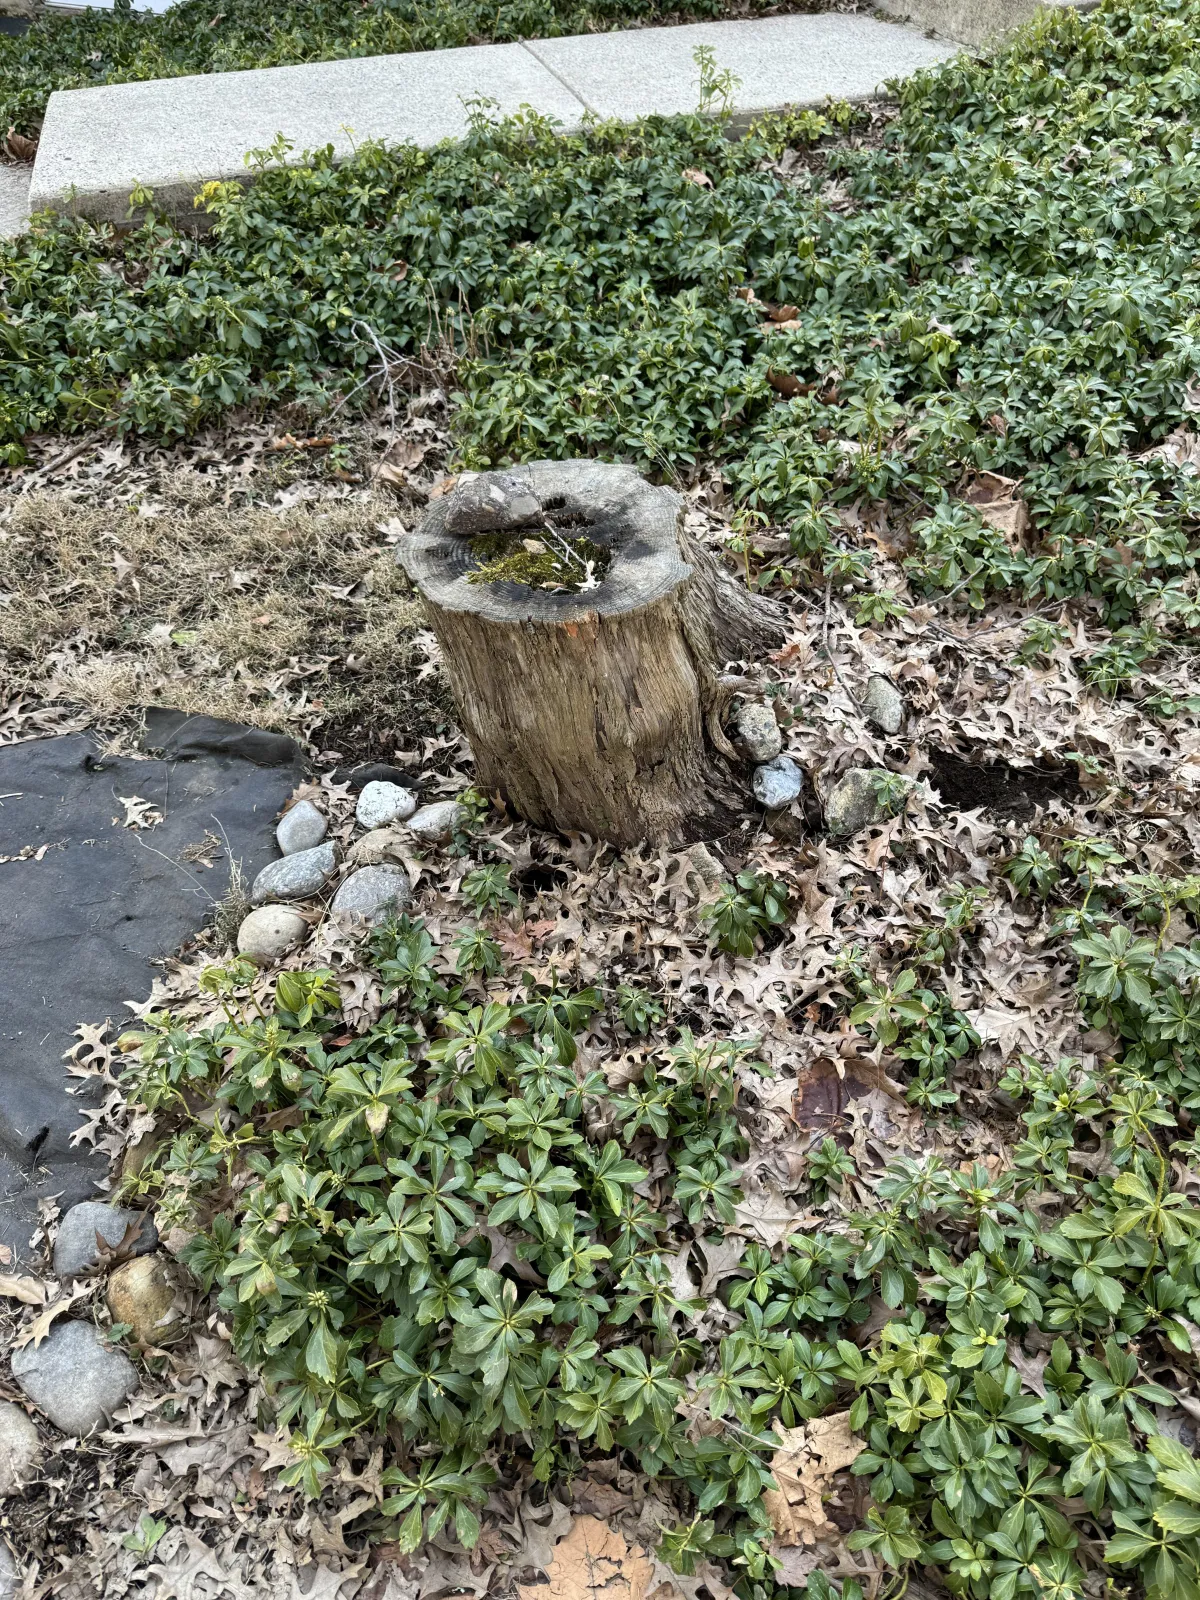 A tree stump in the backyard